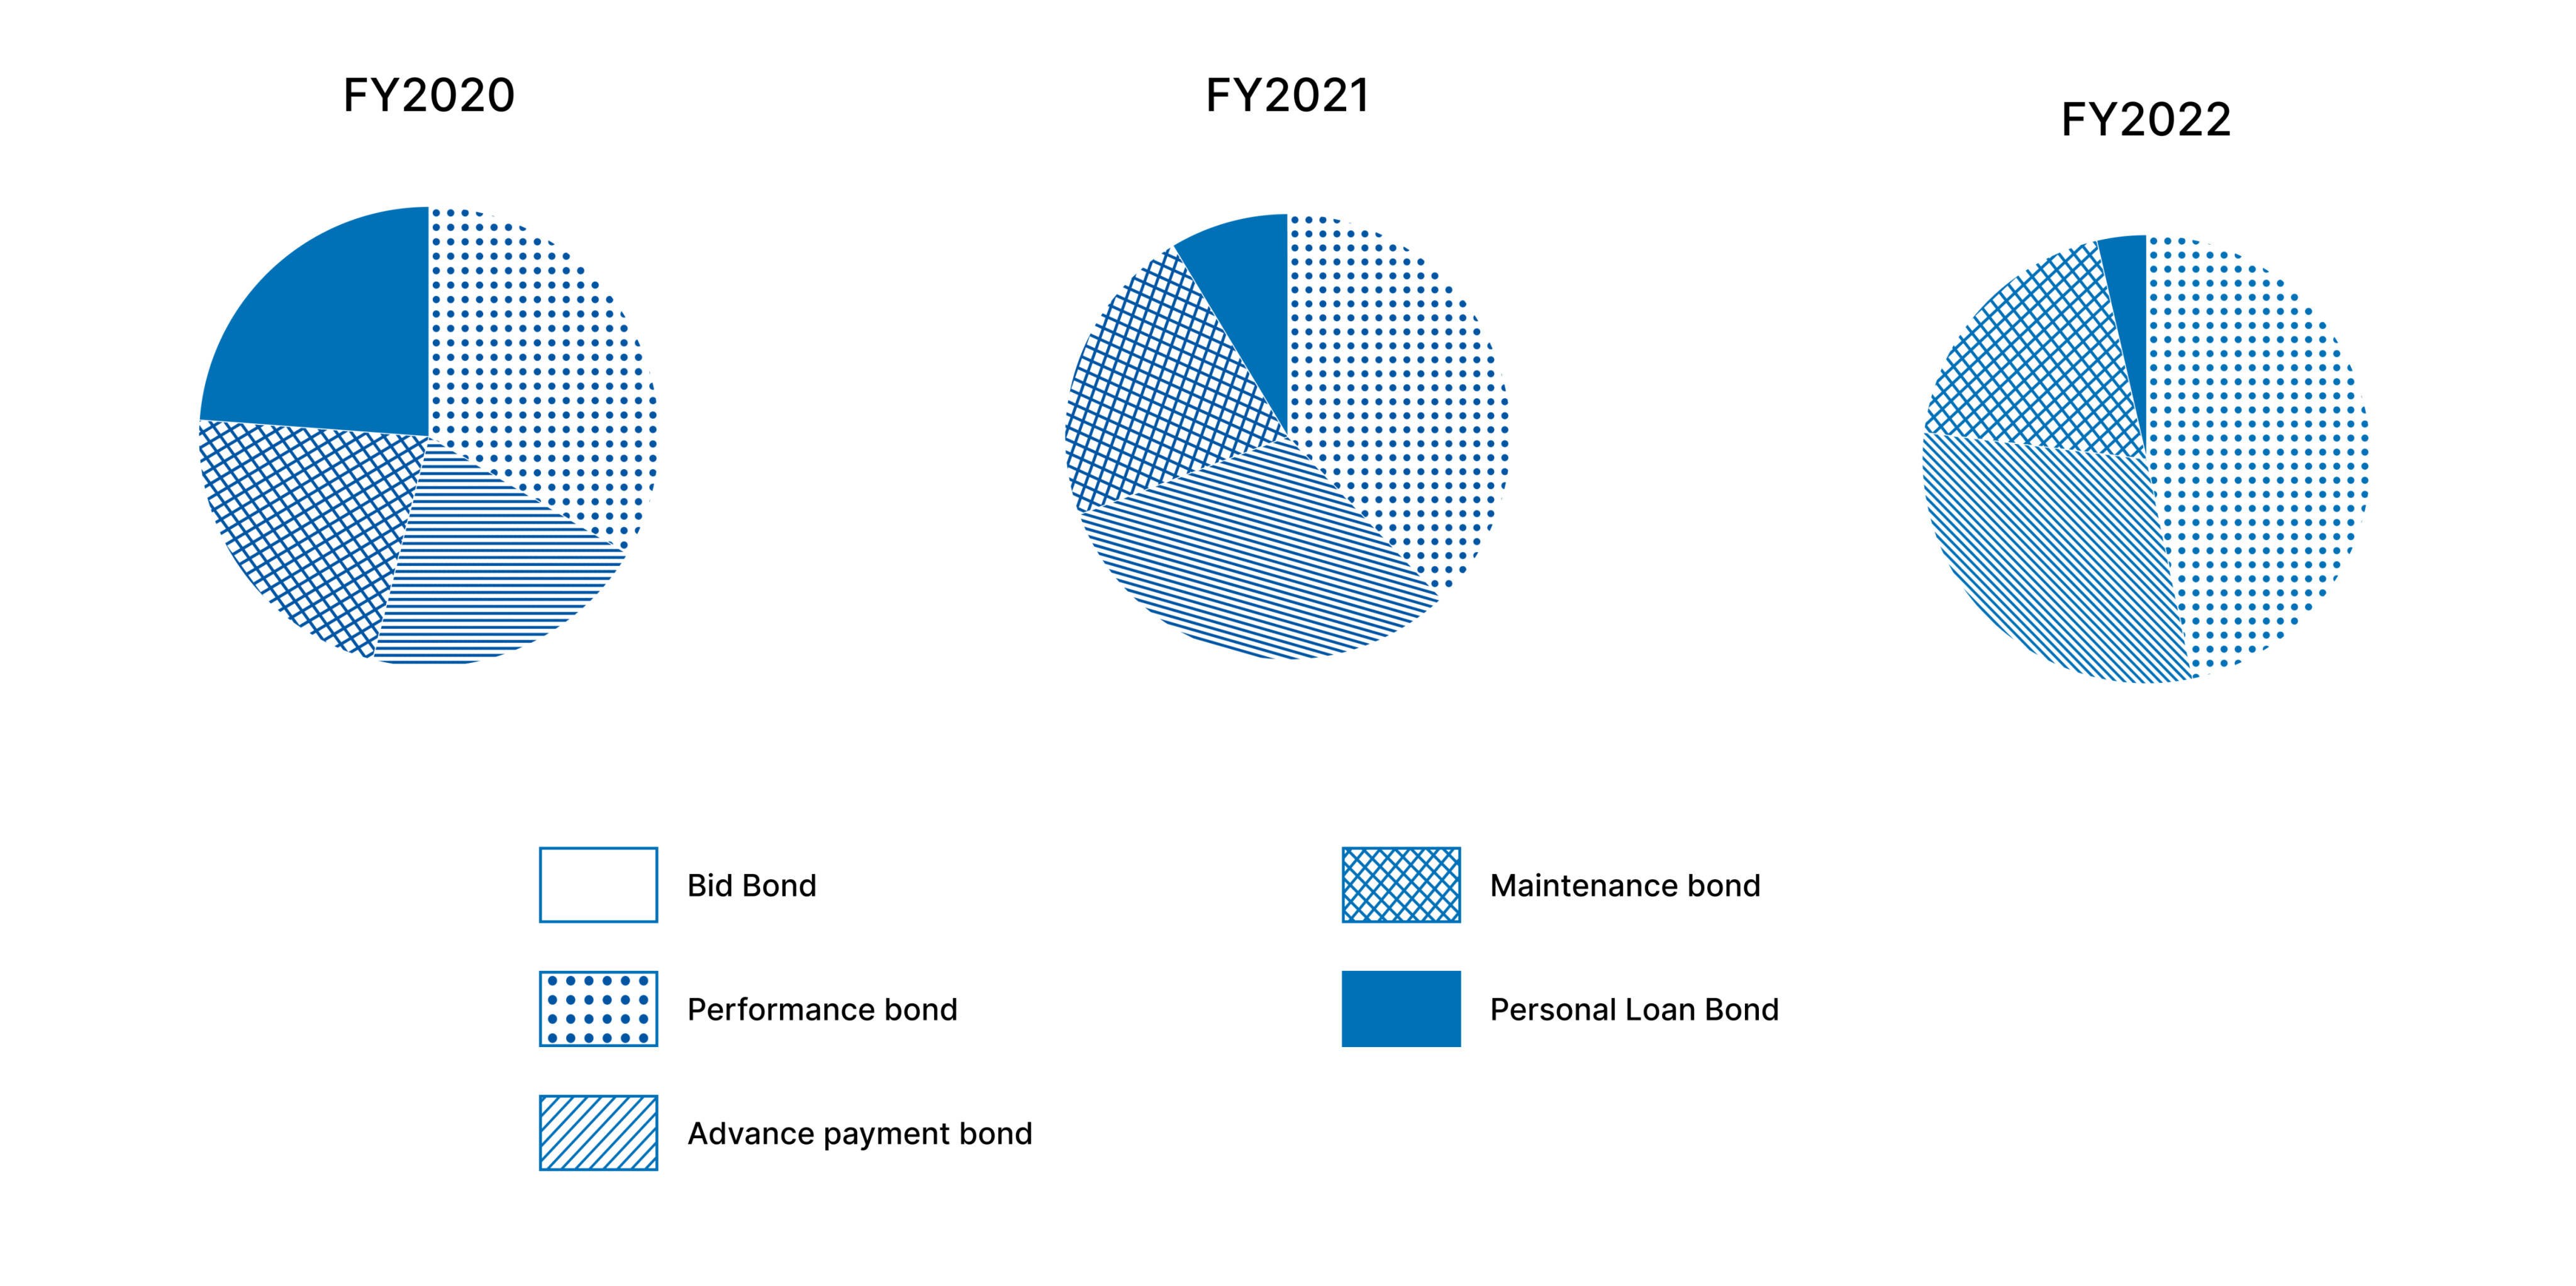 FY2020, bid bond : 0.02%, performance bond : 33.48%, advance payment bond : 20.47%, maintenance bond : 22.21%, personal loan bond : 23.82%, FY2021, bid bond : 0.02%, performance bond : 37.91%, advance payment bond : 31.45%, maintenance bond : 22.06%, personal loan bond : 8.56%, FY2022, bid bond : 0.03%, performance bond : 46.70%, advance payment bond : 30.3%, maintenance bond : 19.45%, personal loan bond : 3.51%